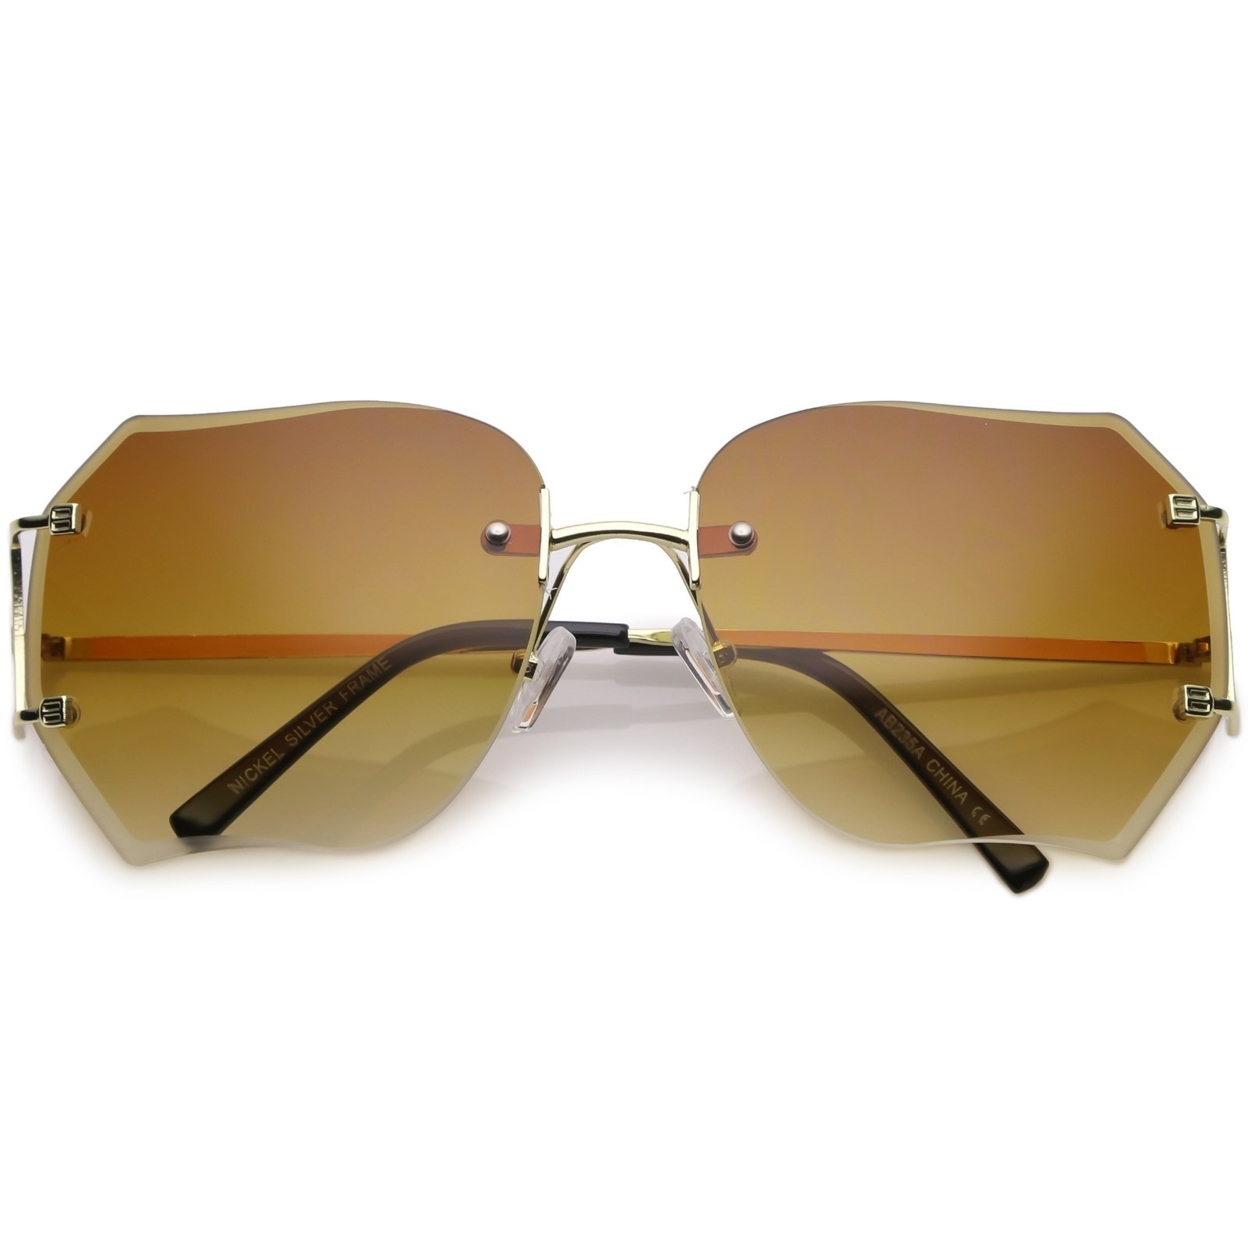 Oversize Rimless Square Sunglasses Slim Metal Arms Beveled Gradient Lens 61mm - Gold / Amber